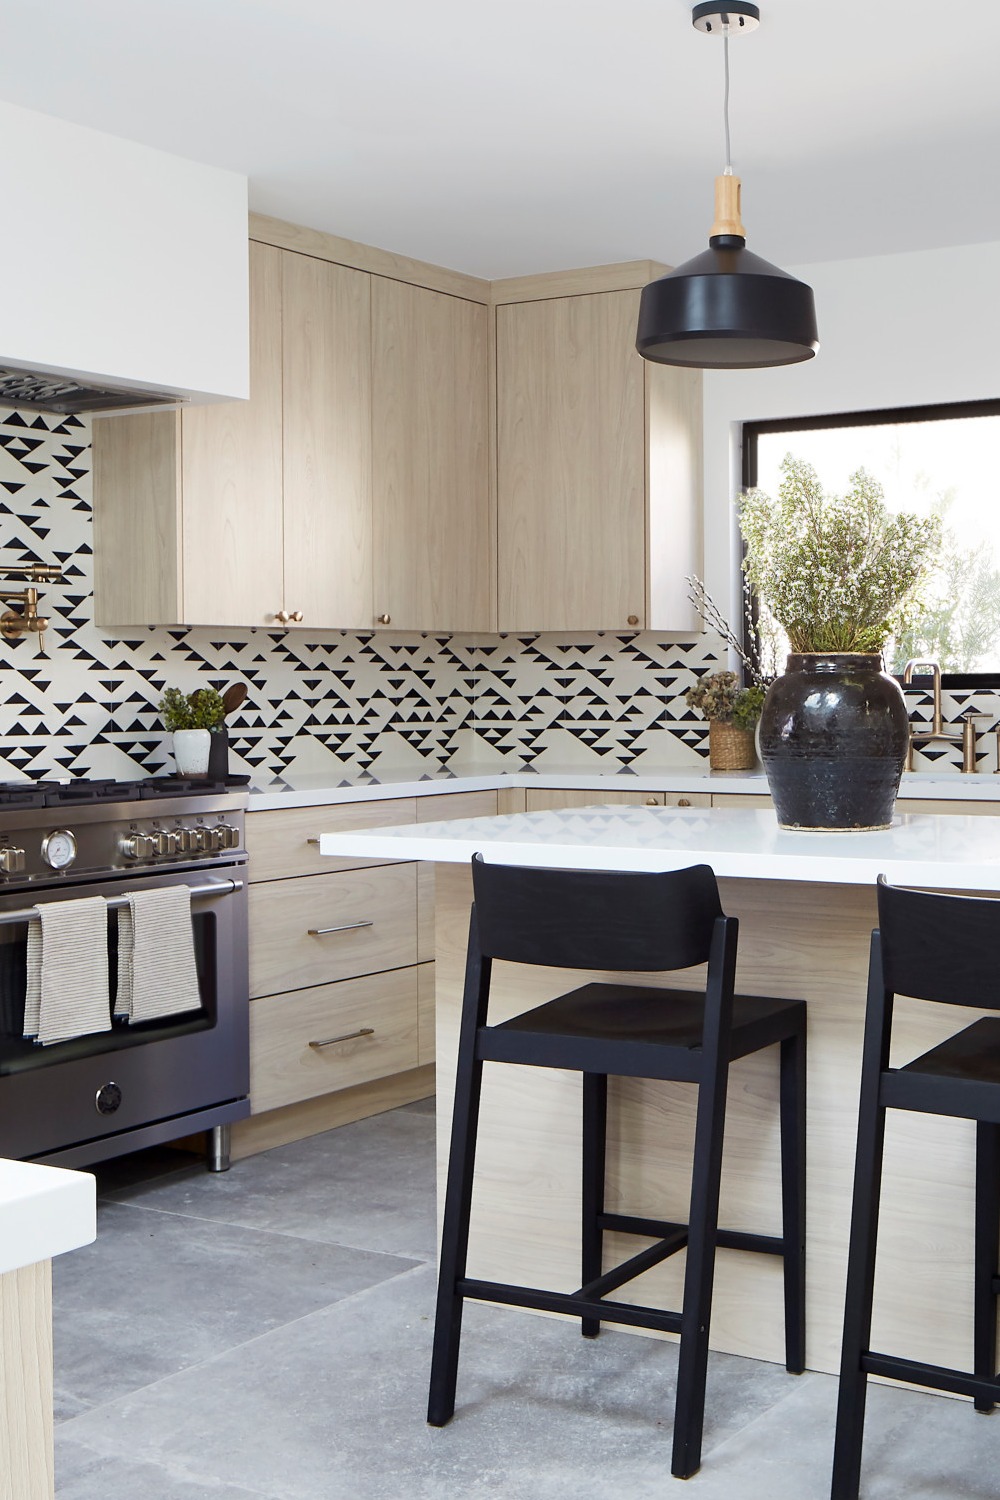 Marble Countertops Kitchen Area Wood Contemporary Decor Shades Ceramic Walls